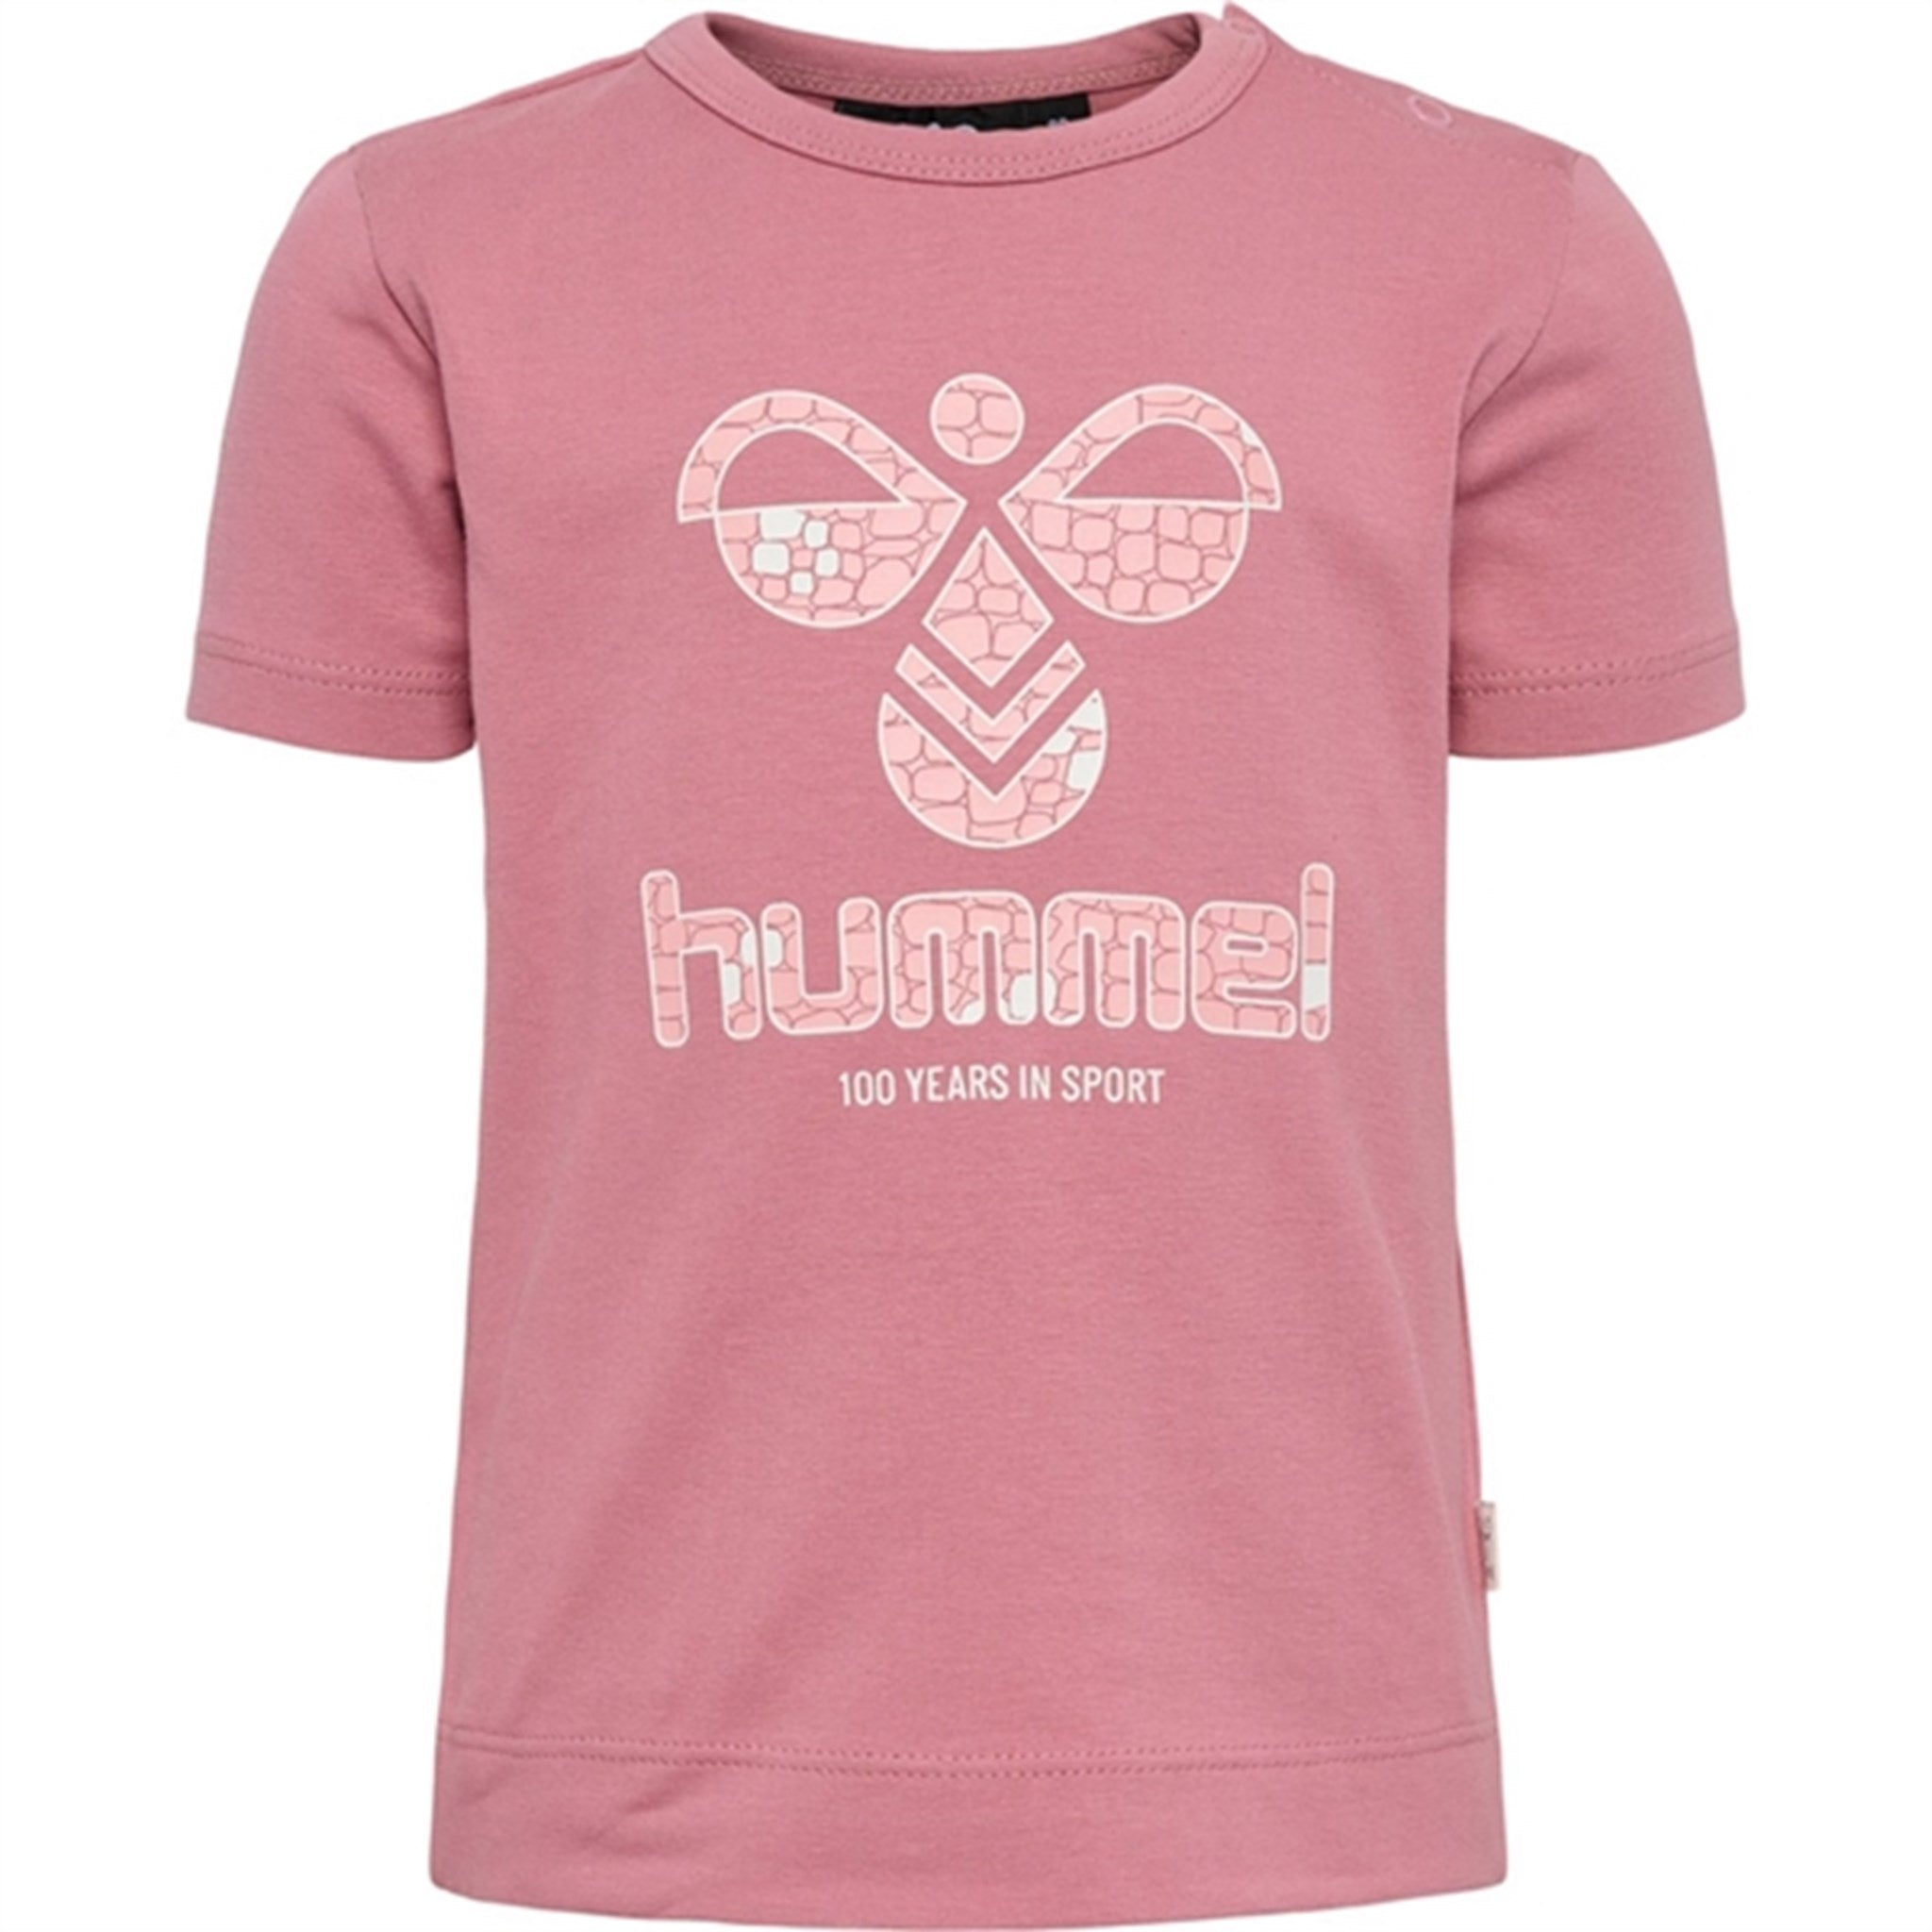 Hummel Mesa Rose Talya T-shirt S/S